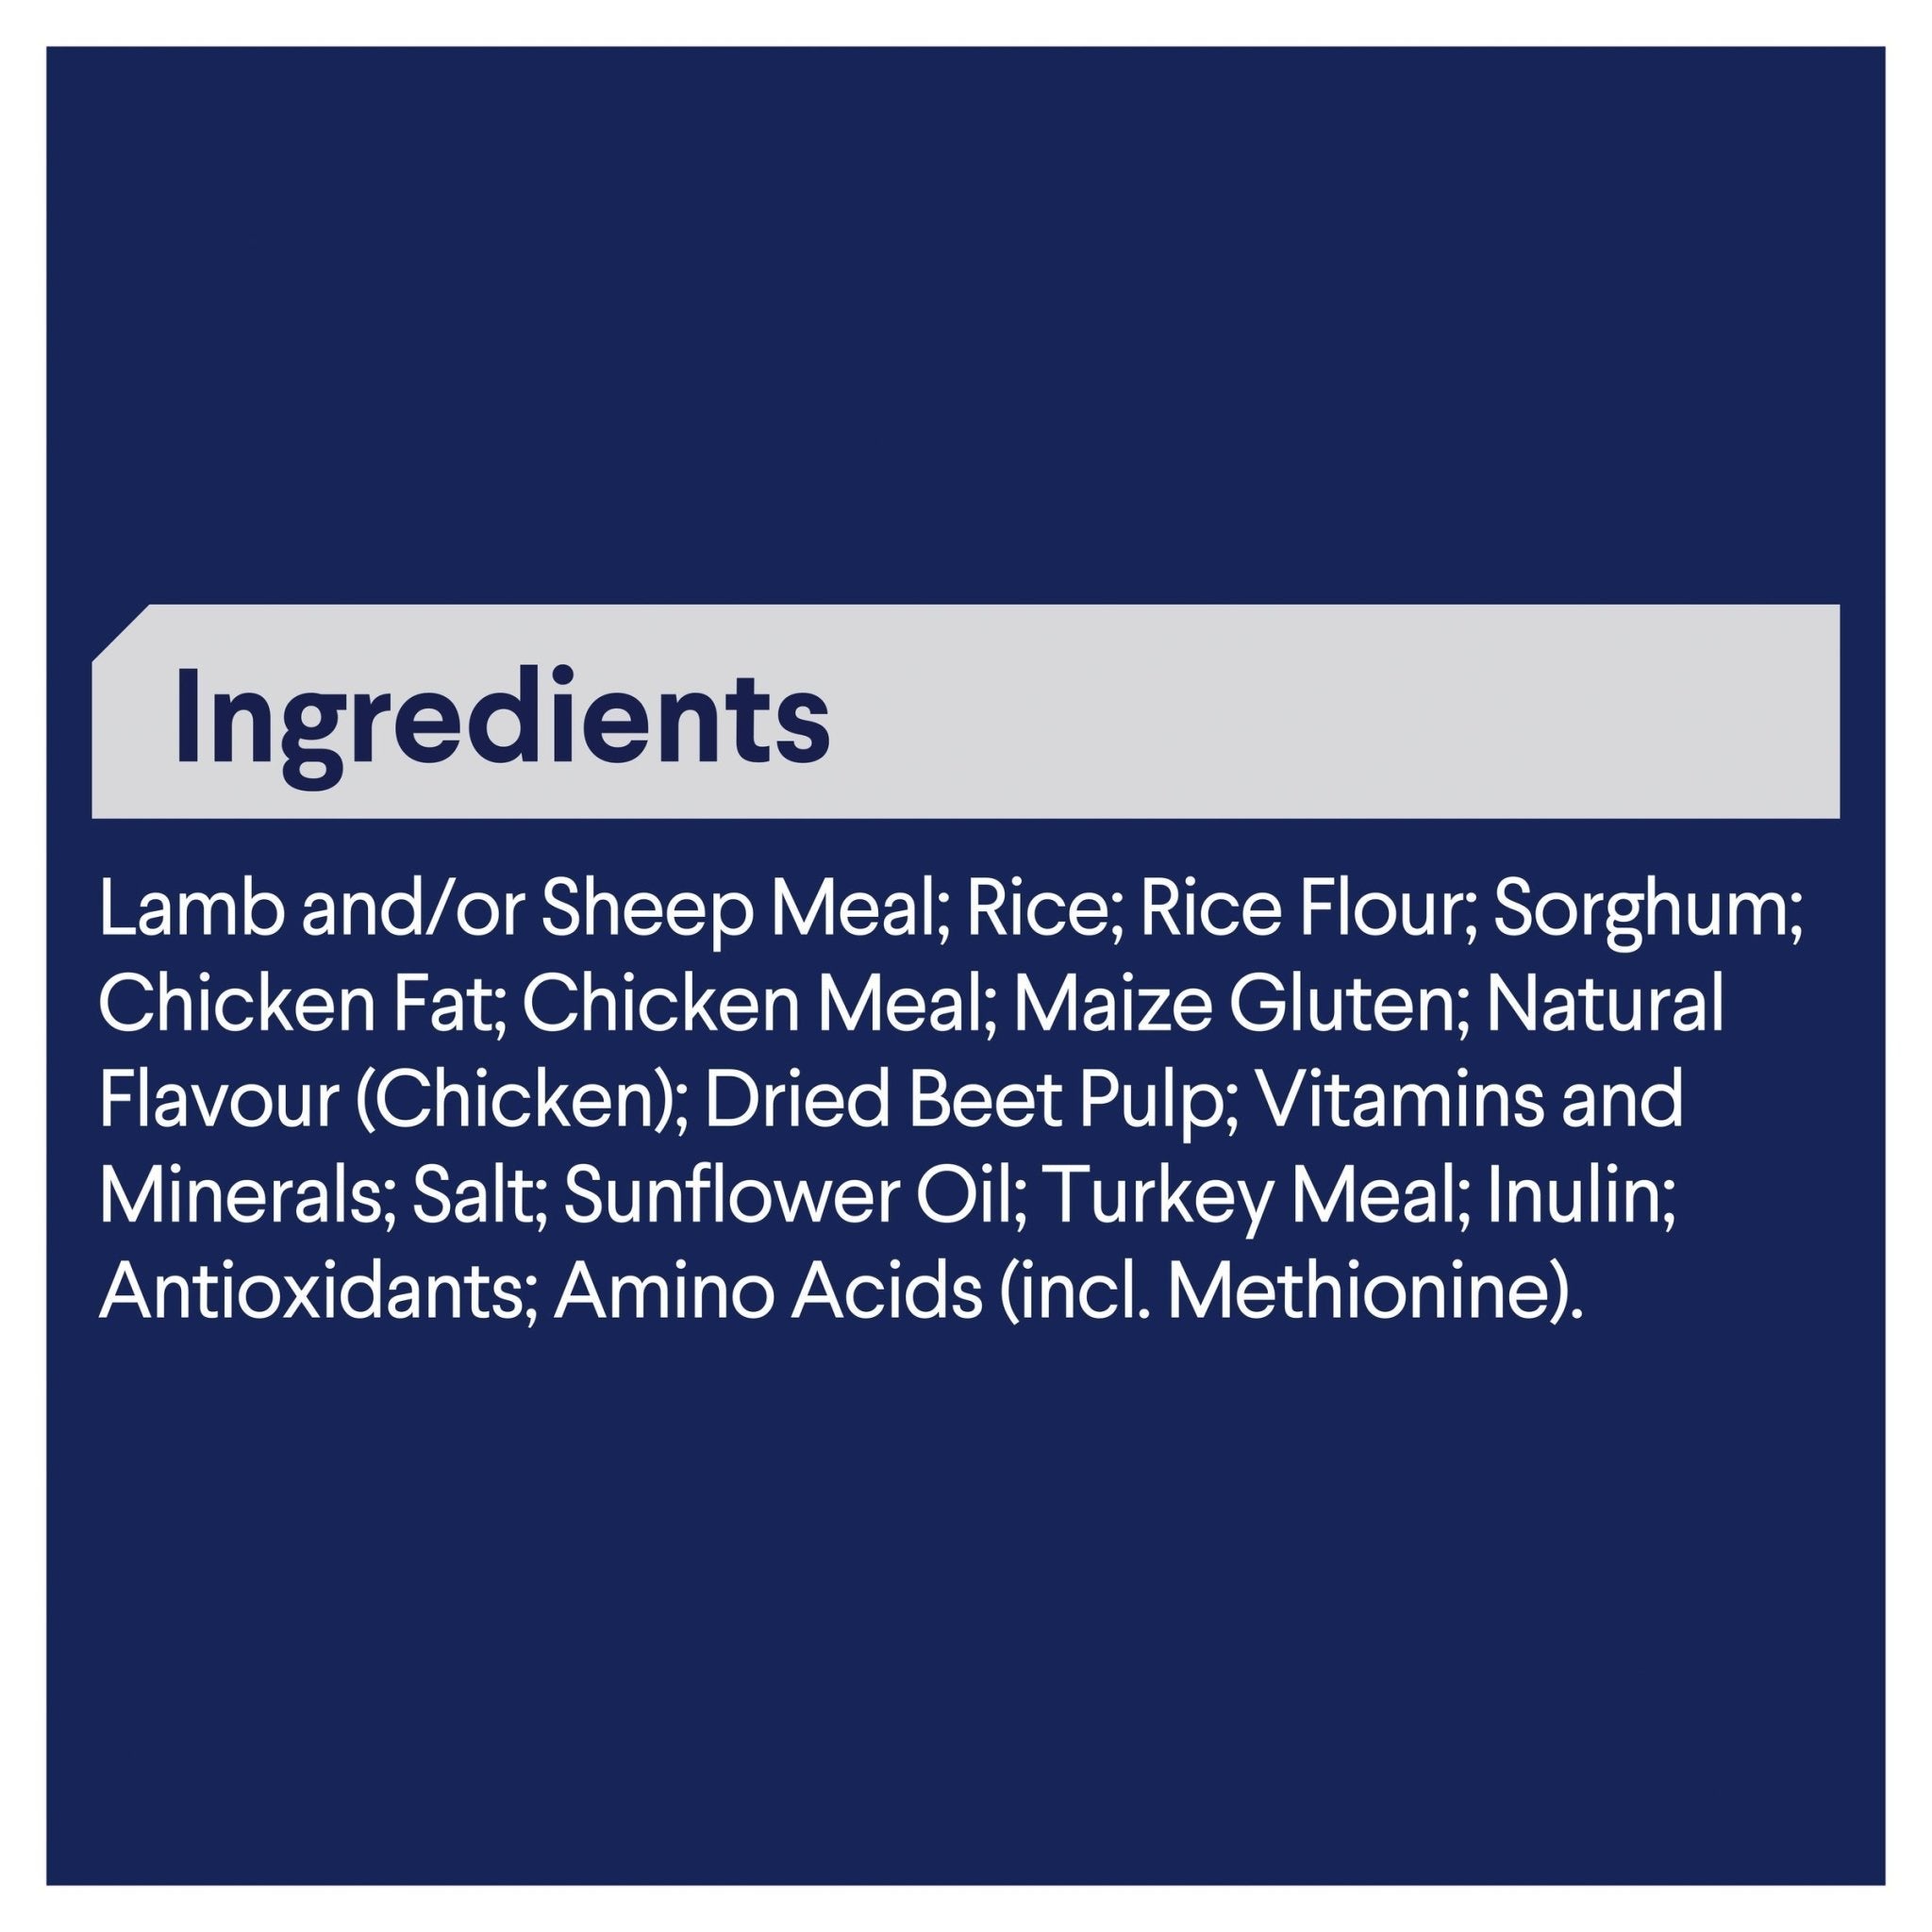 ADVANCE Medium Adult Dry Dog Food Lamb with Rice